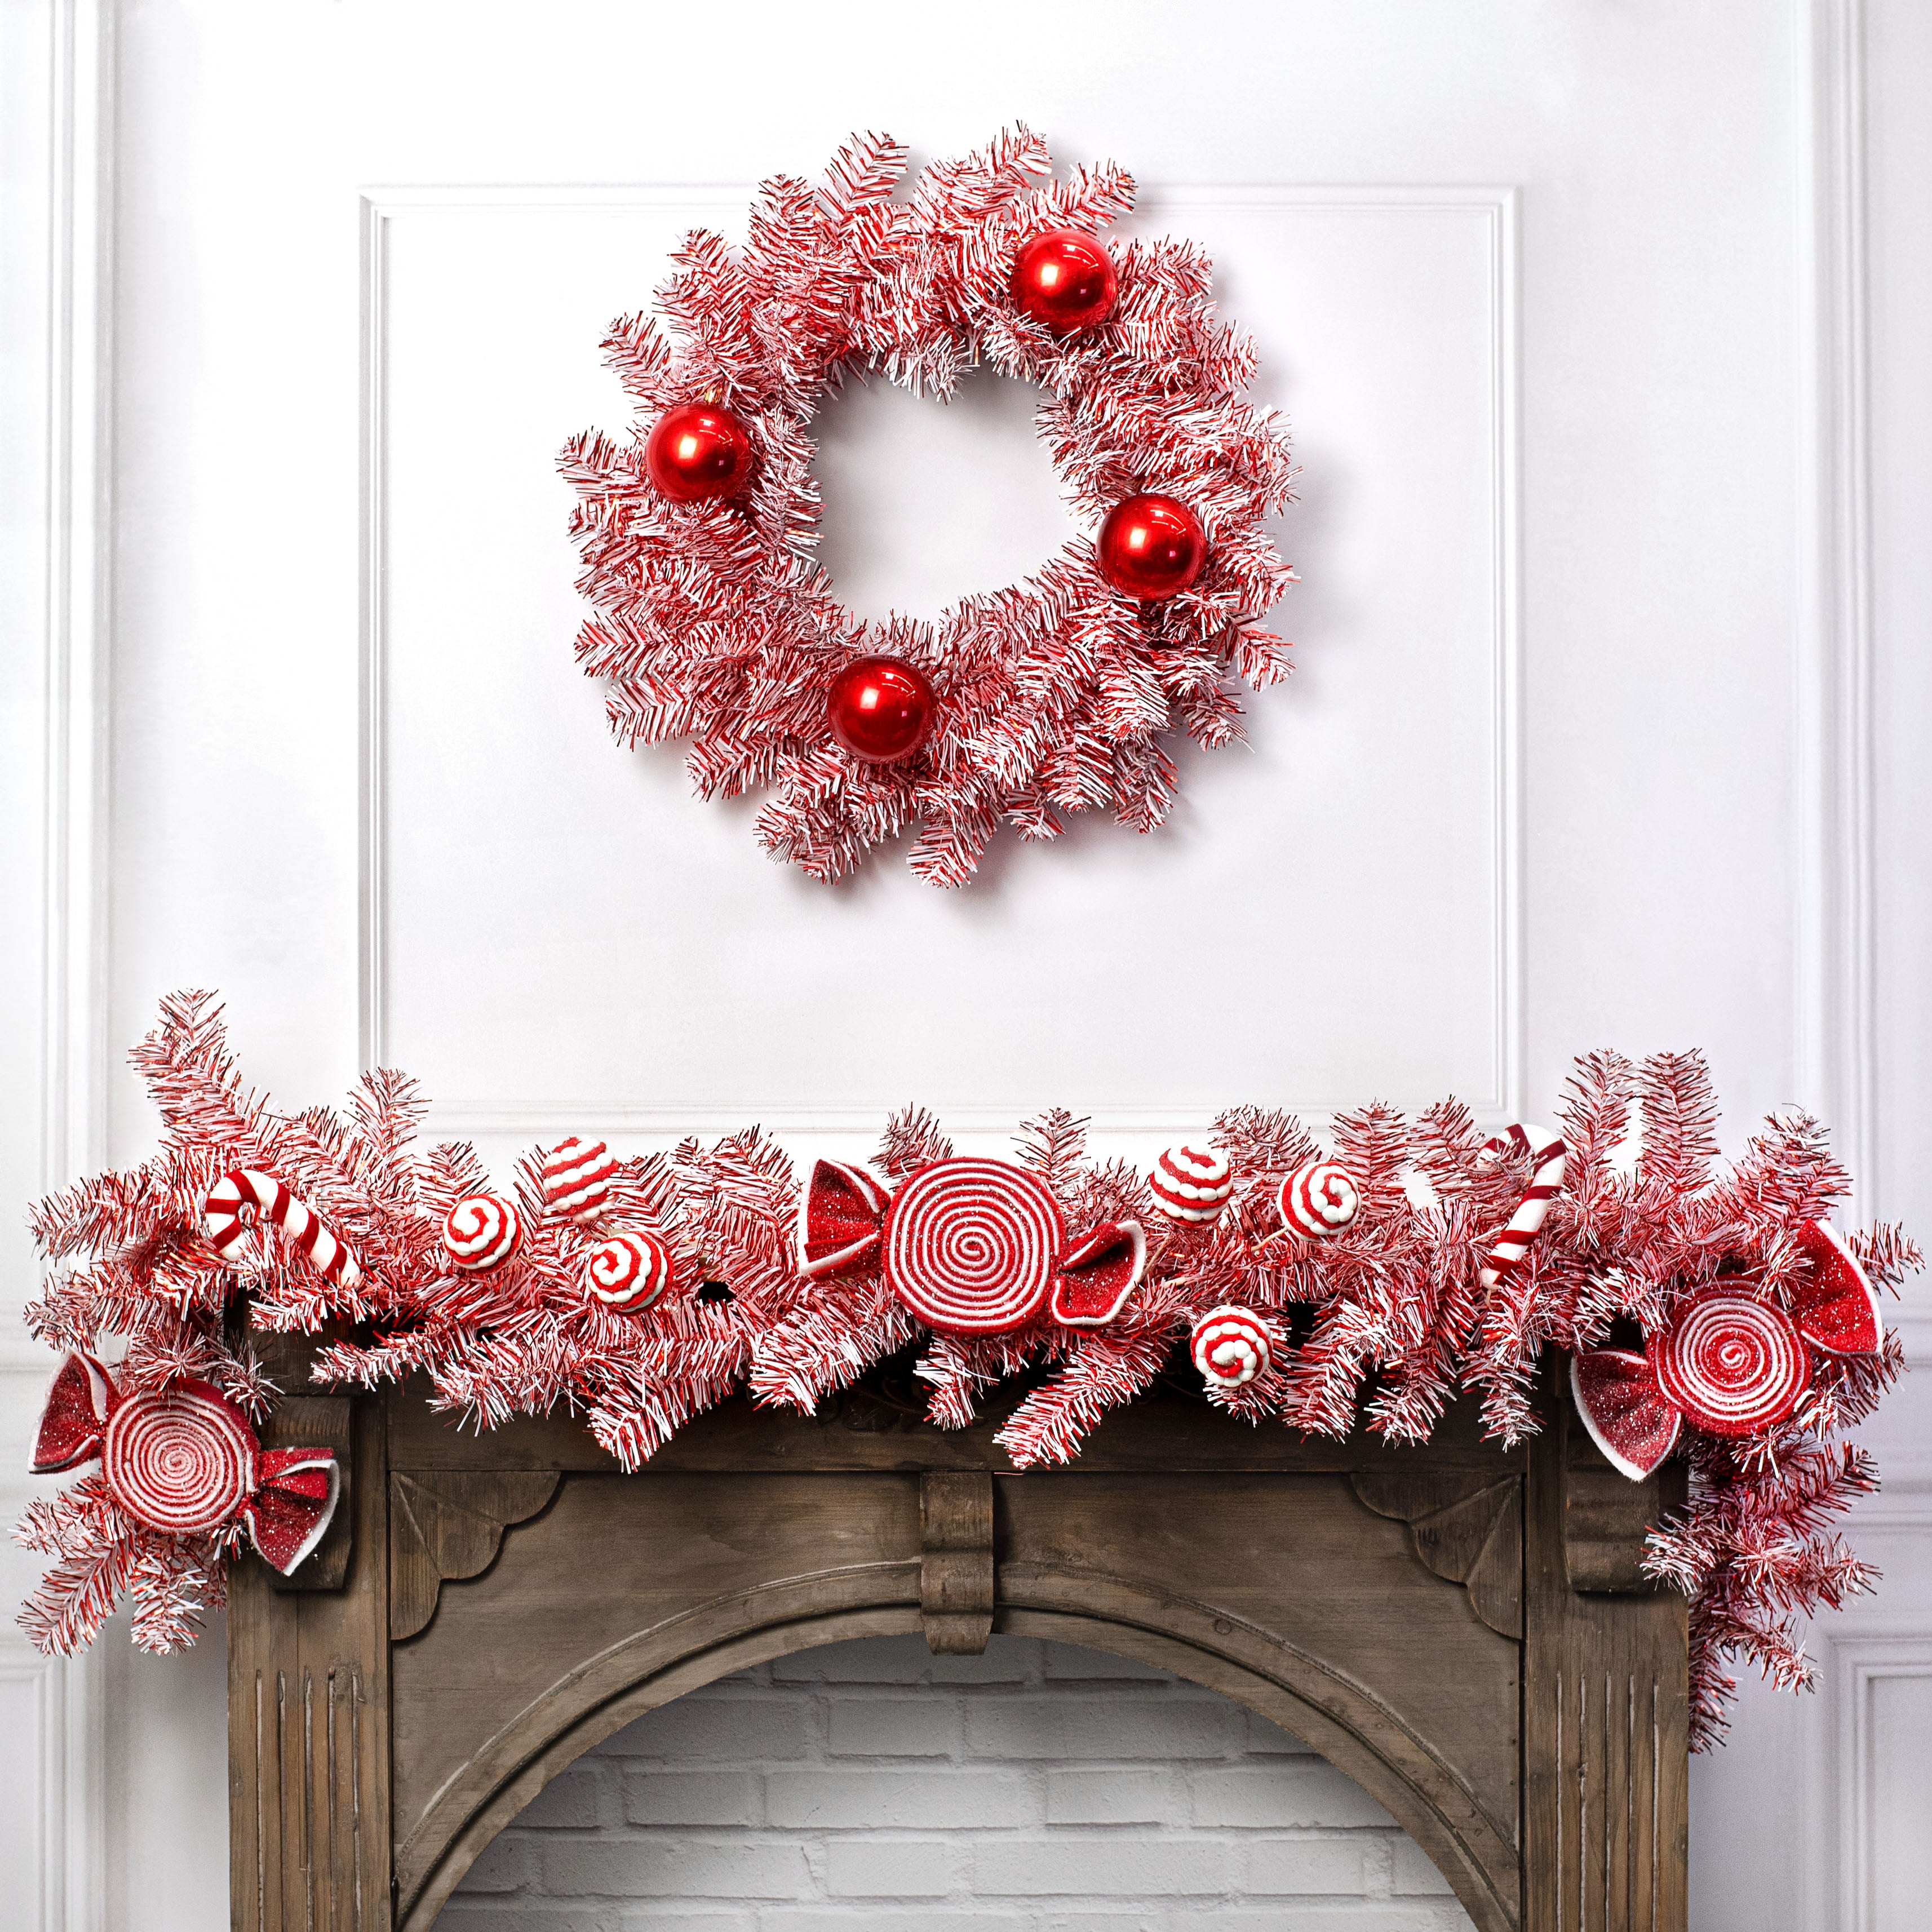 24" PVC Pine Wreath: Red & White